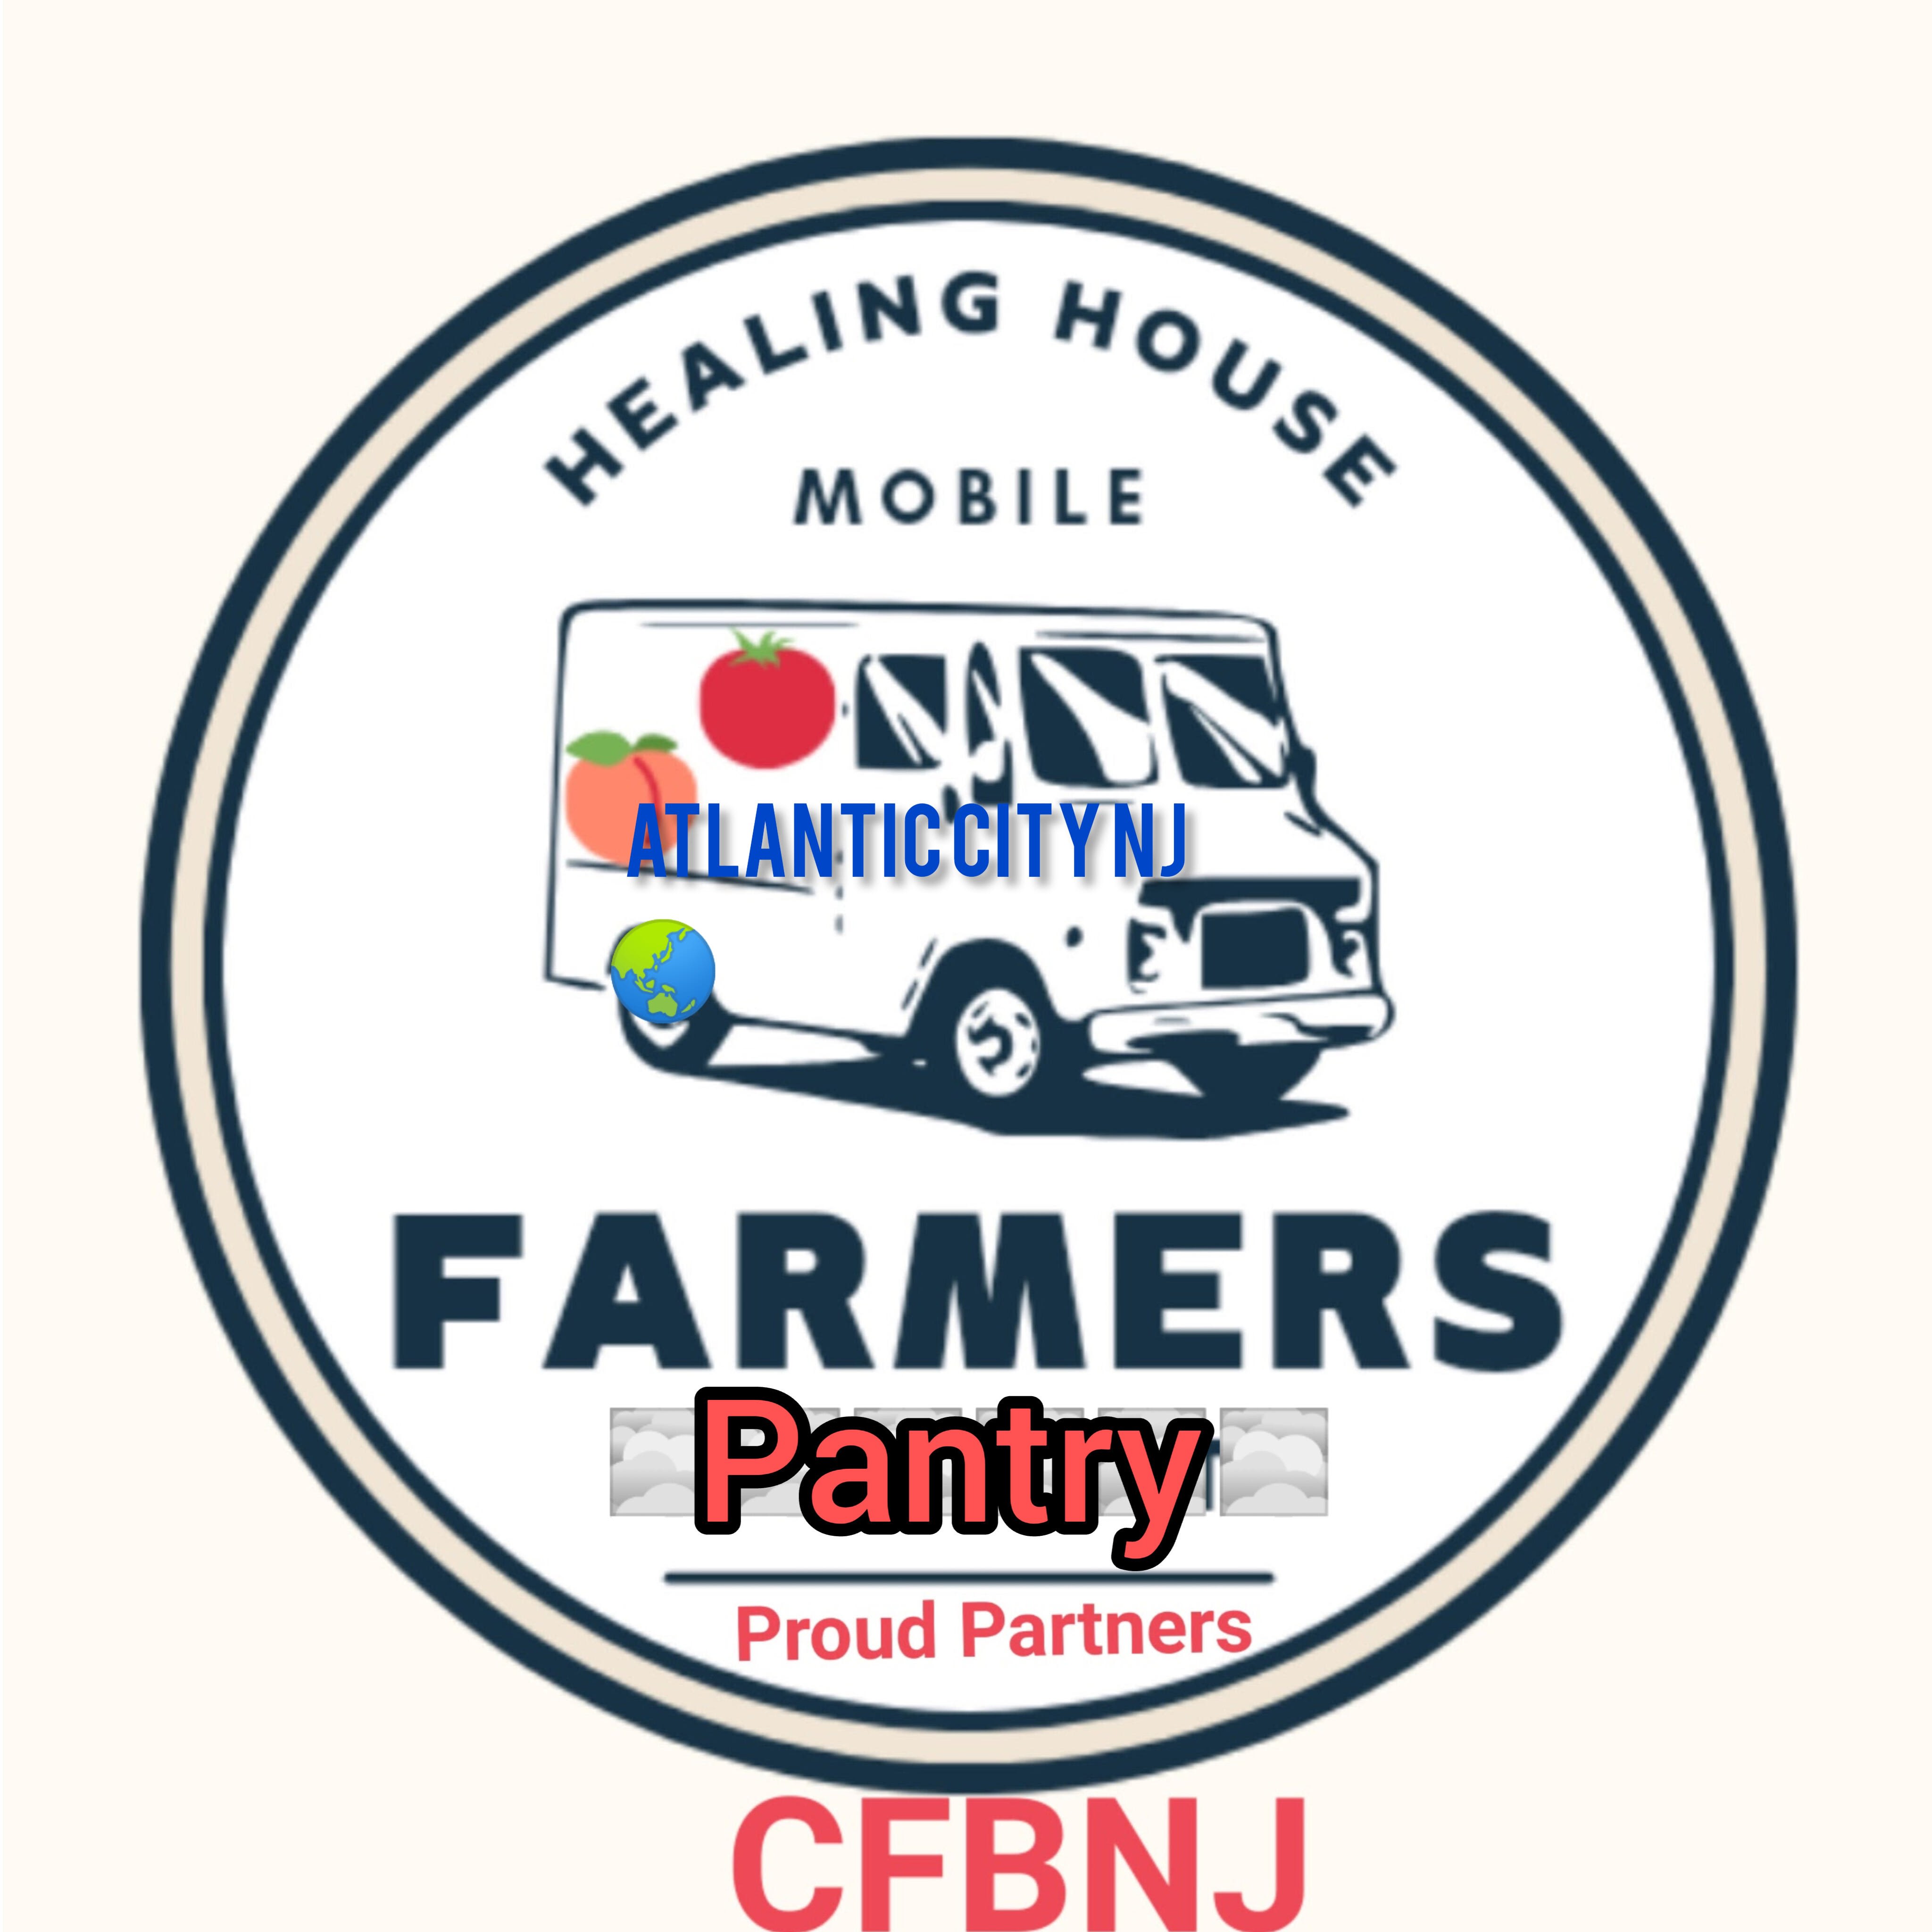 Healing House Mobile Farmer's Pantry